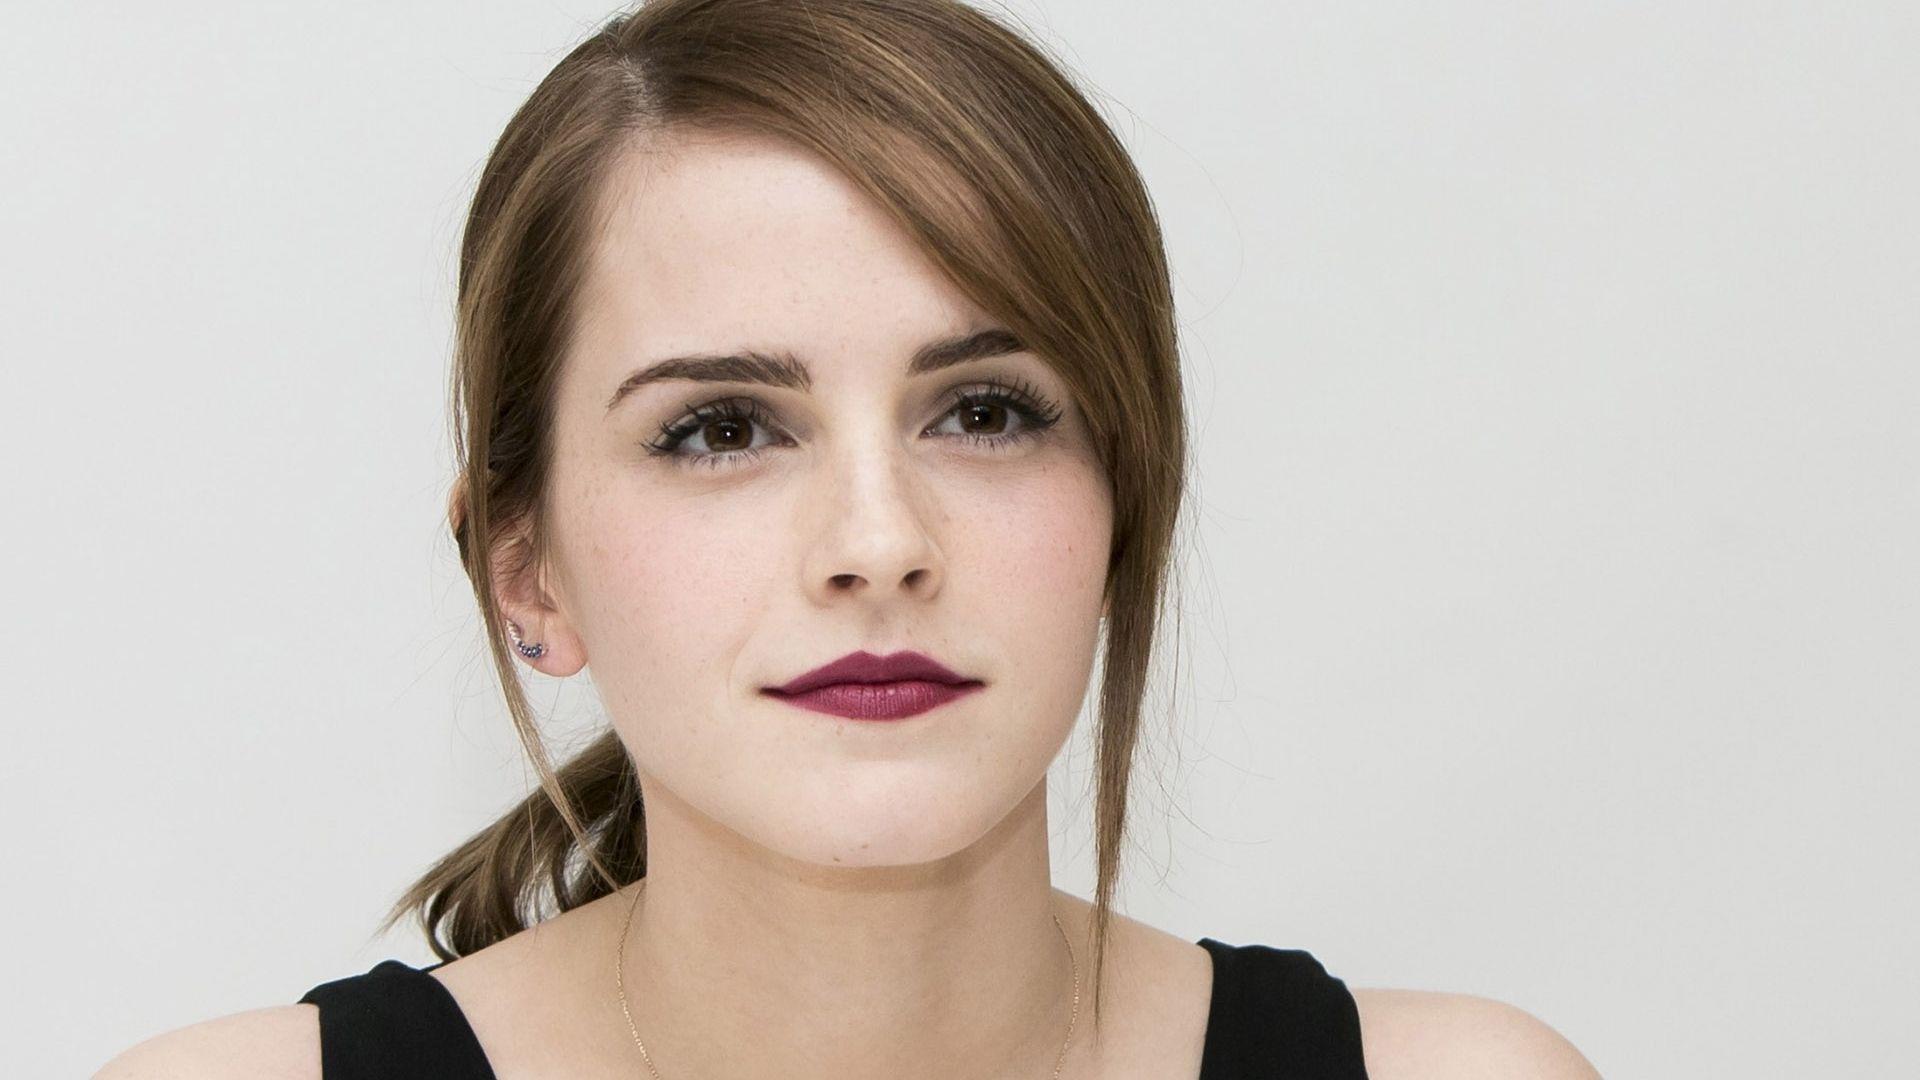 Emma Watson Wallpaper 50401 1920x1080 px